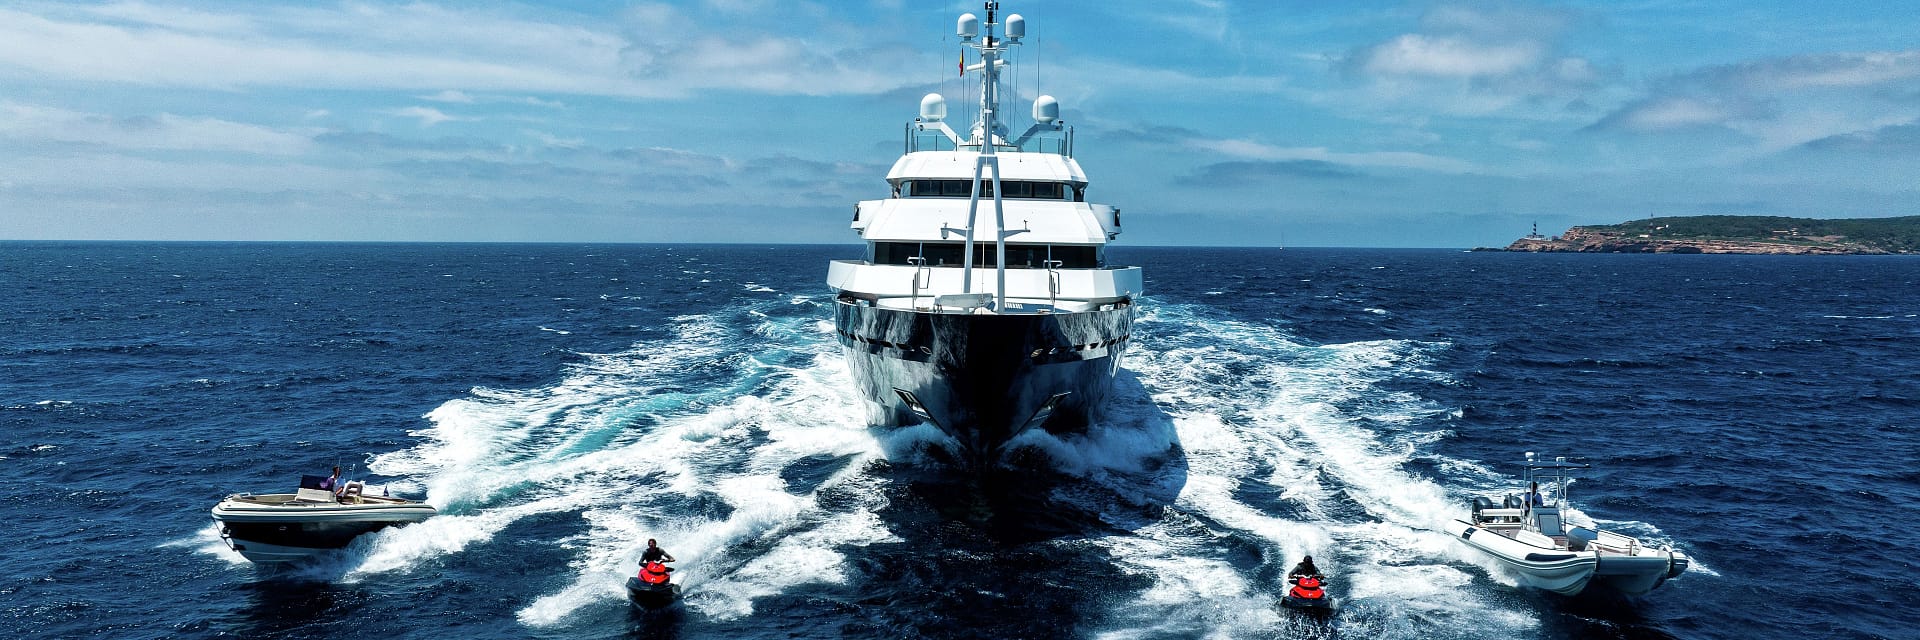 oceanco-motor-yacht-y701